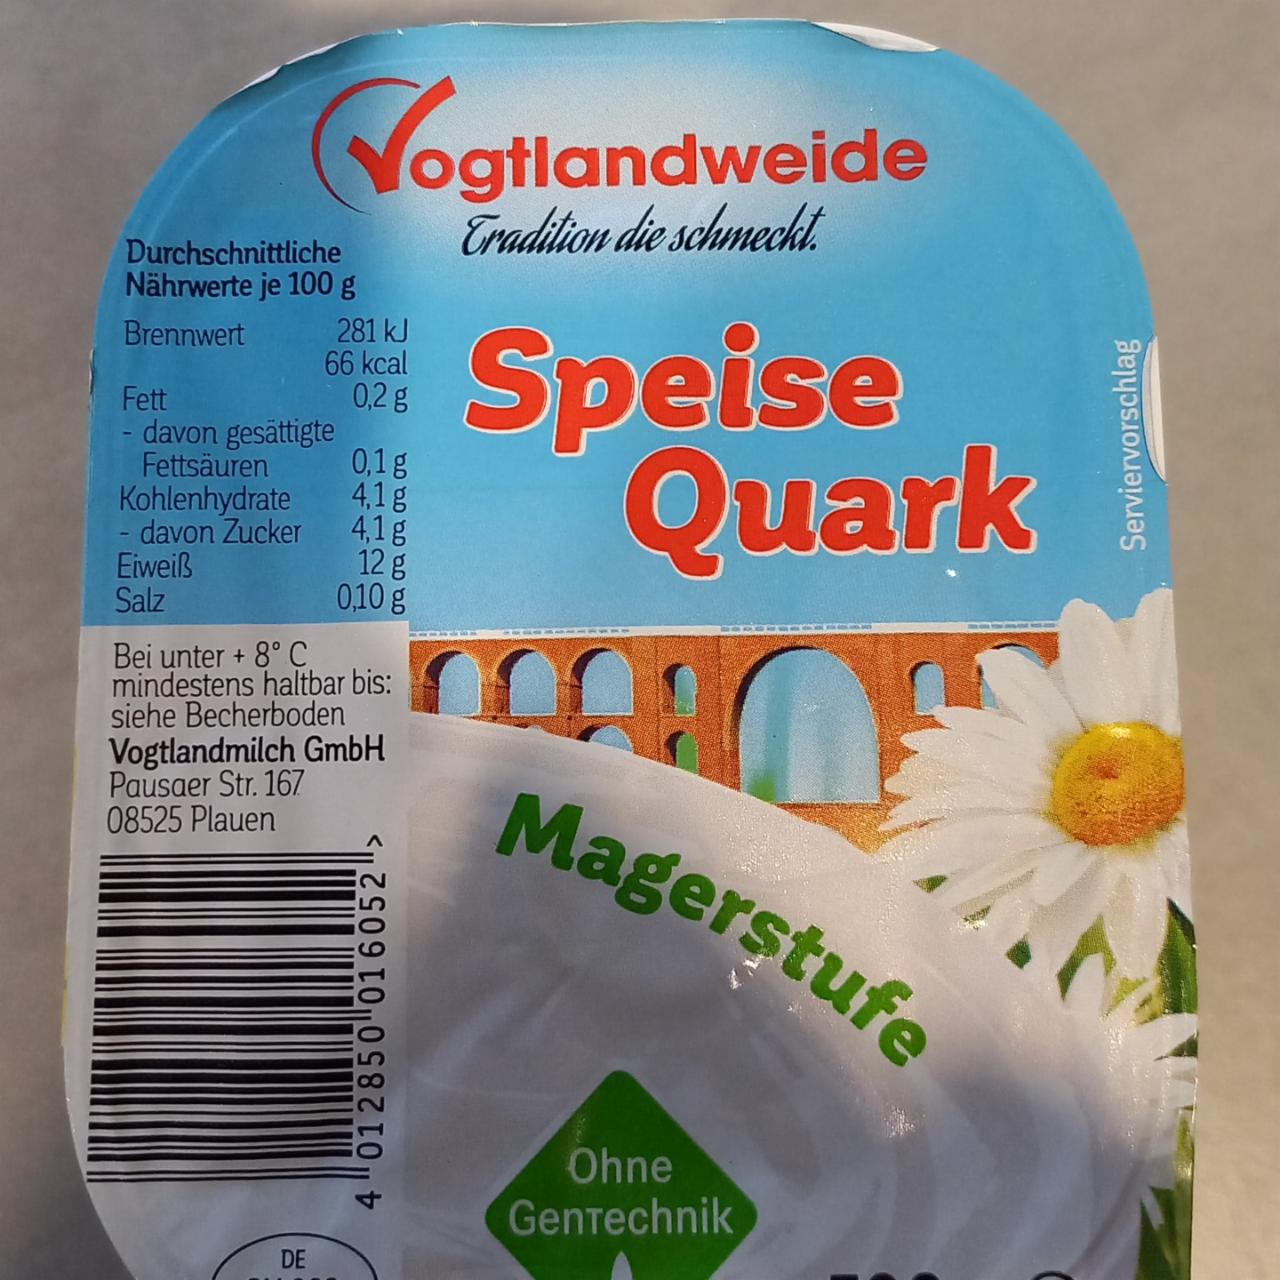 Fotografie - Speise quark magerstufe Vogtlandweide